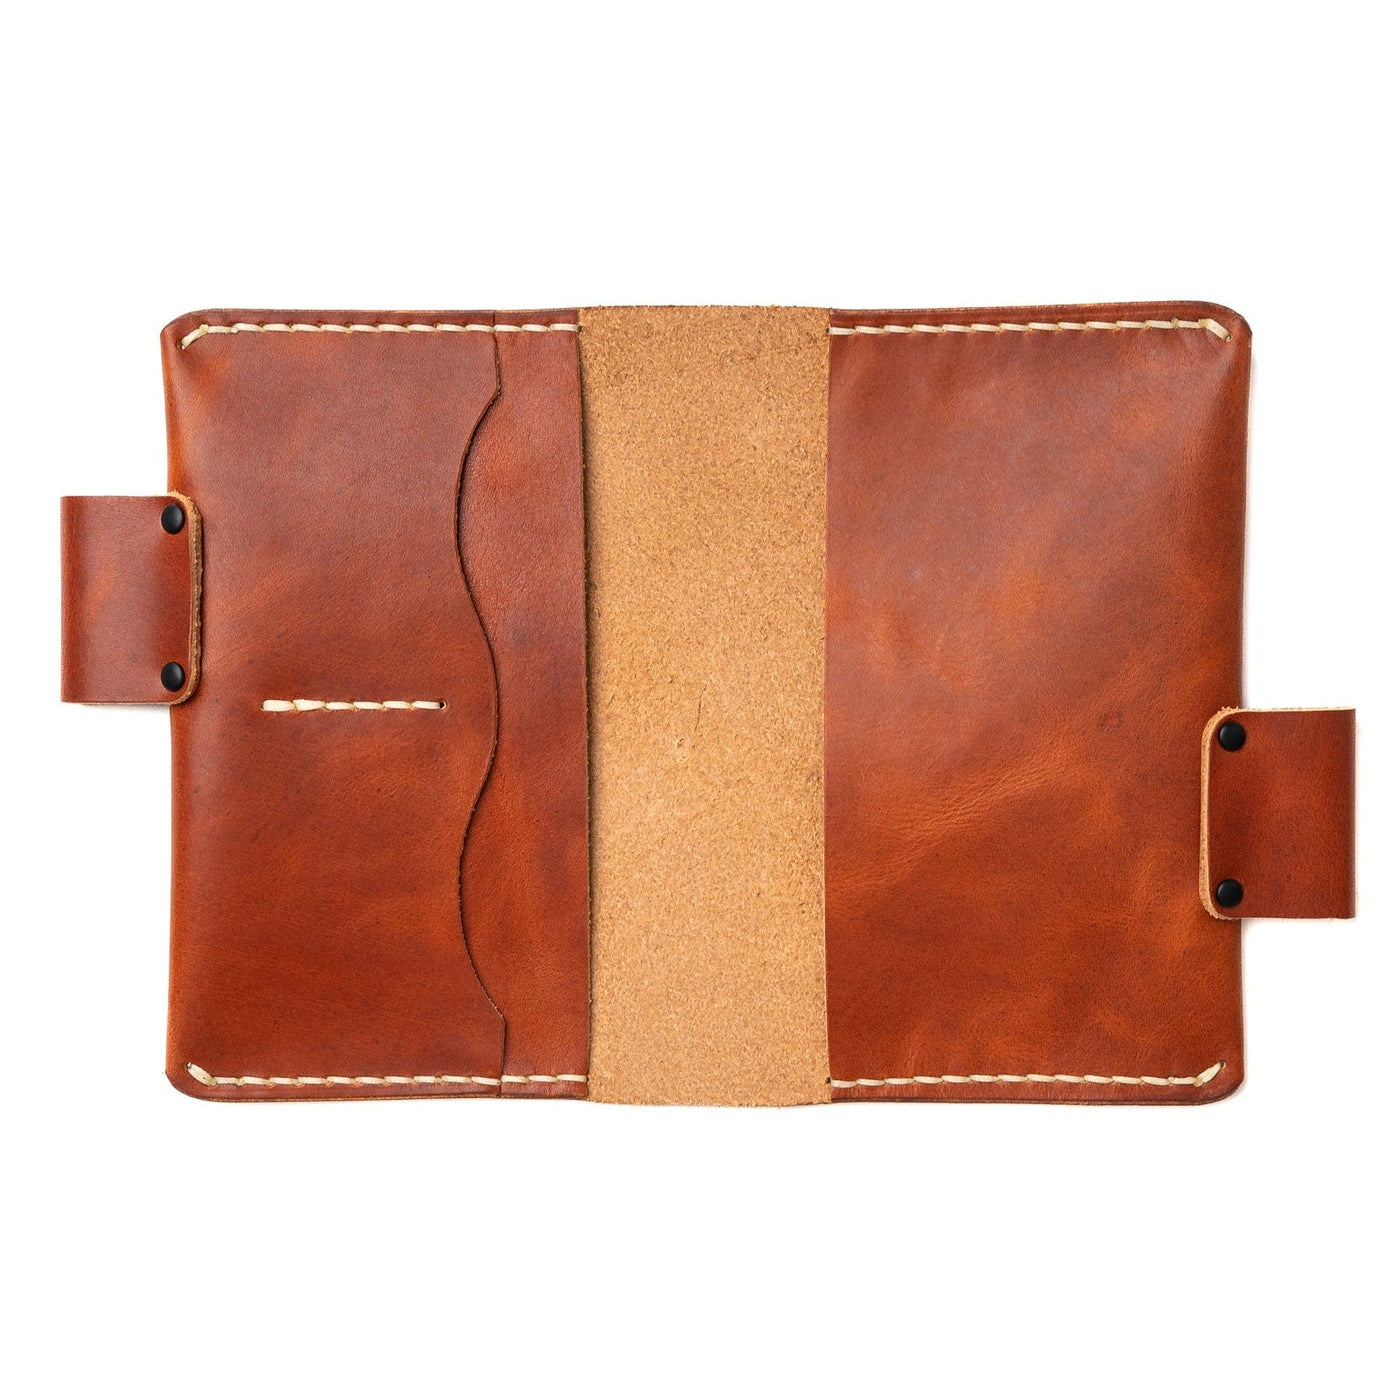 Leather Moleskine Pocket Cover - English Tan Popov Leather